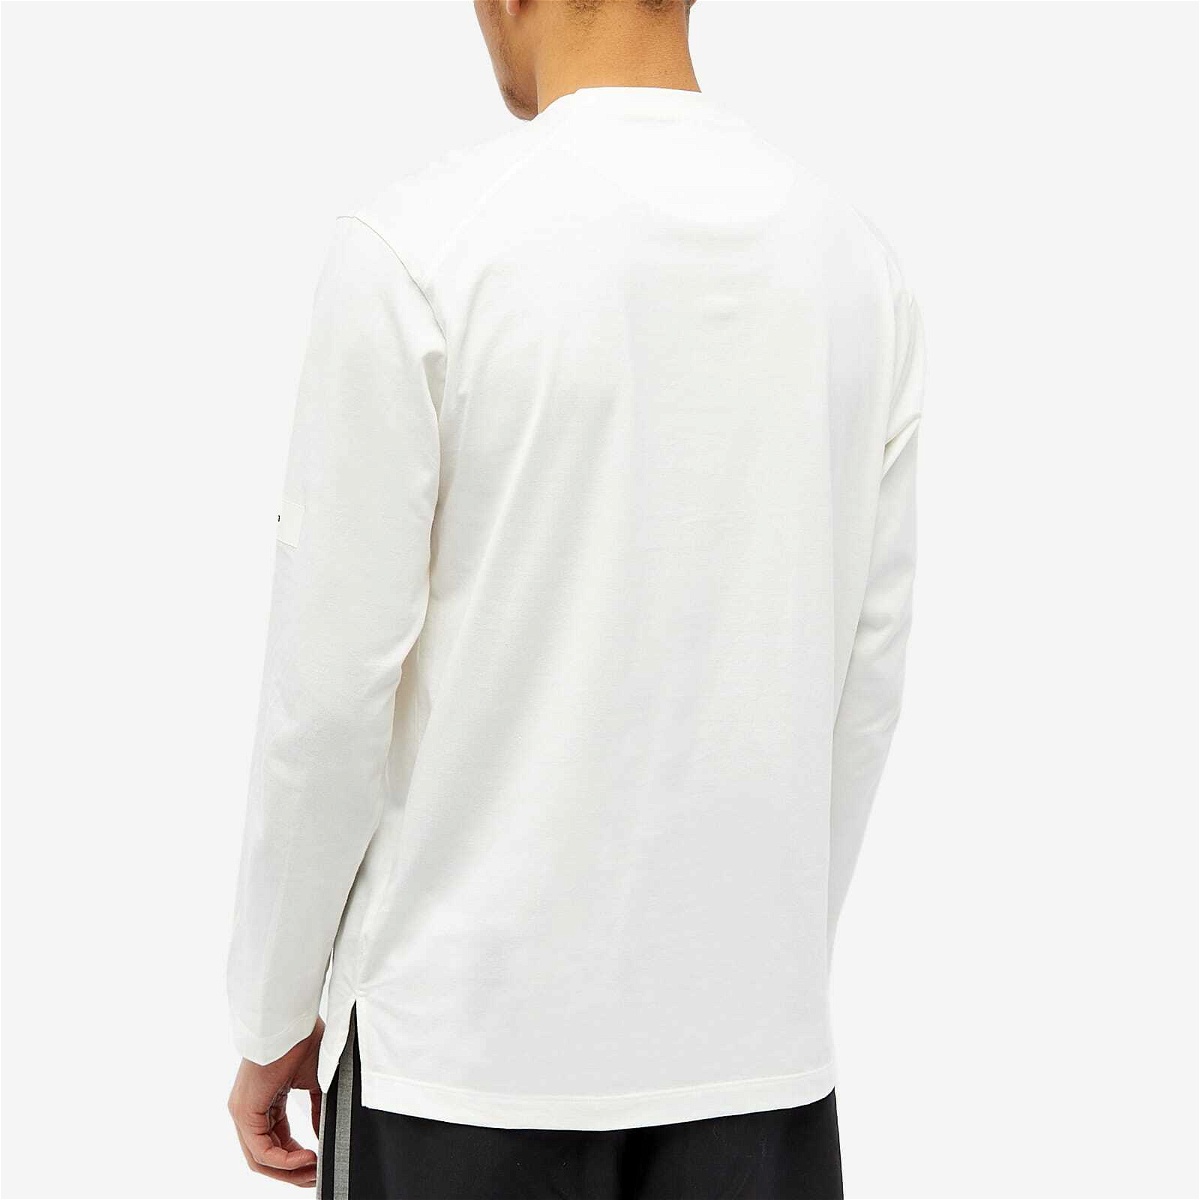 Y-3 Men's Core Logo Long Sleeve T-Shirt in Off White